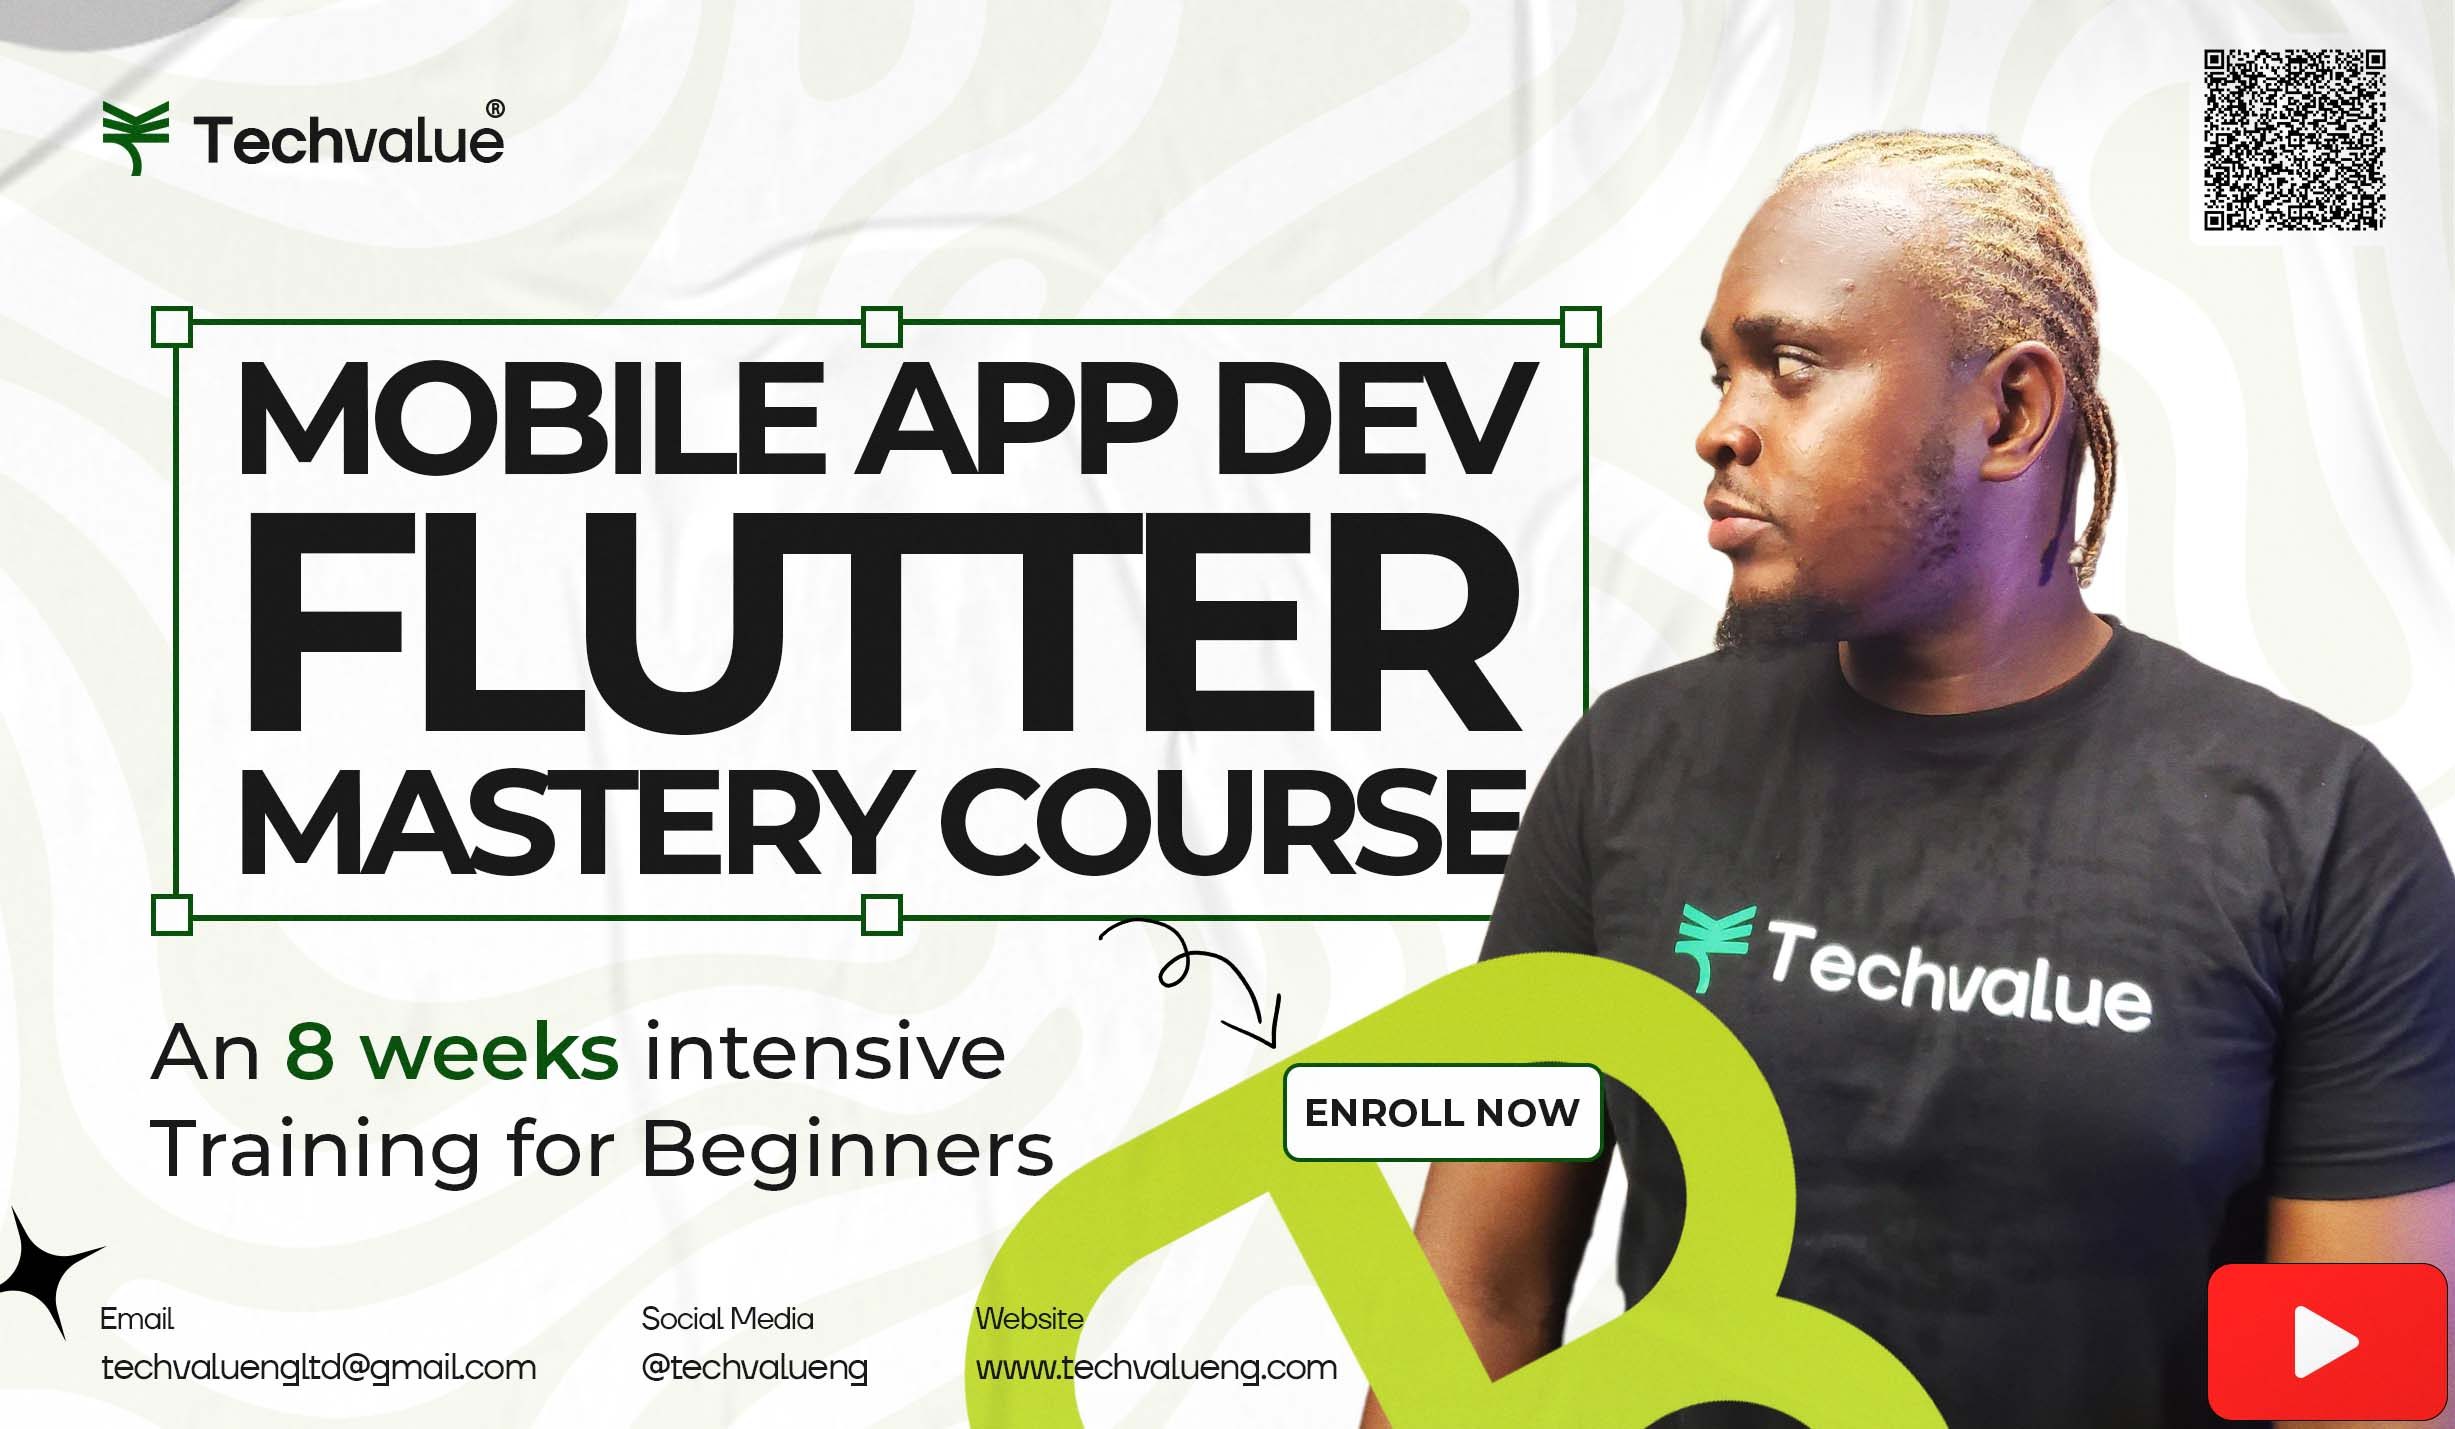 Mobile App Development Flutter by Master james